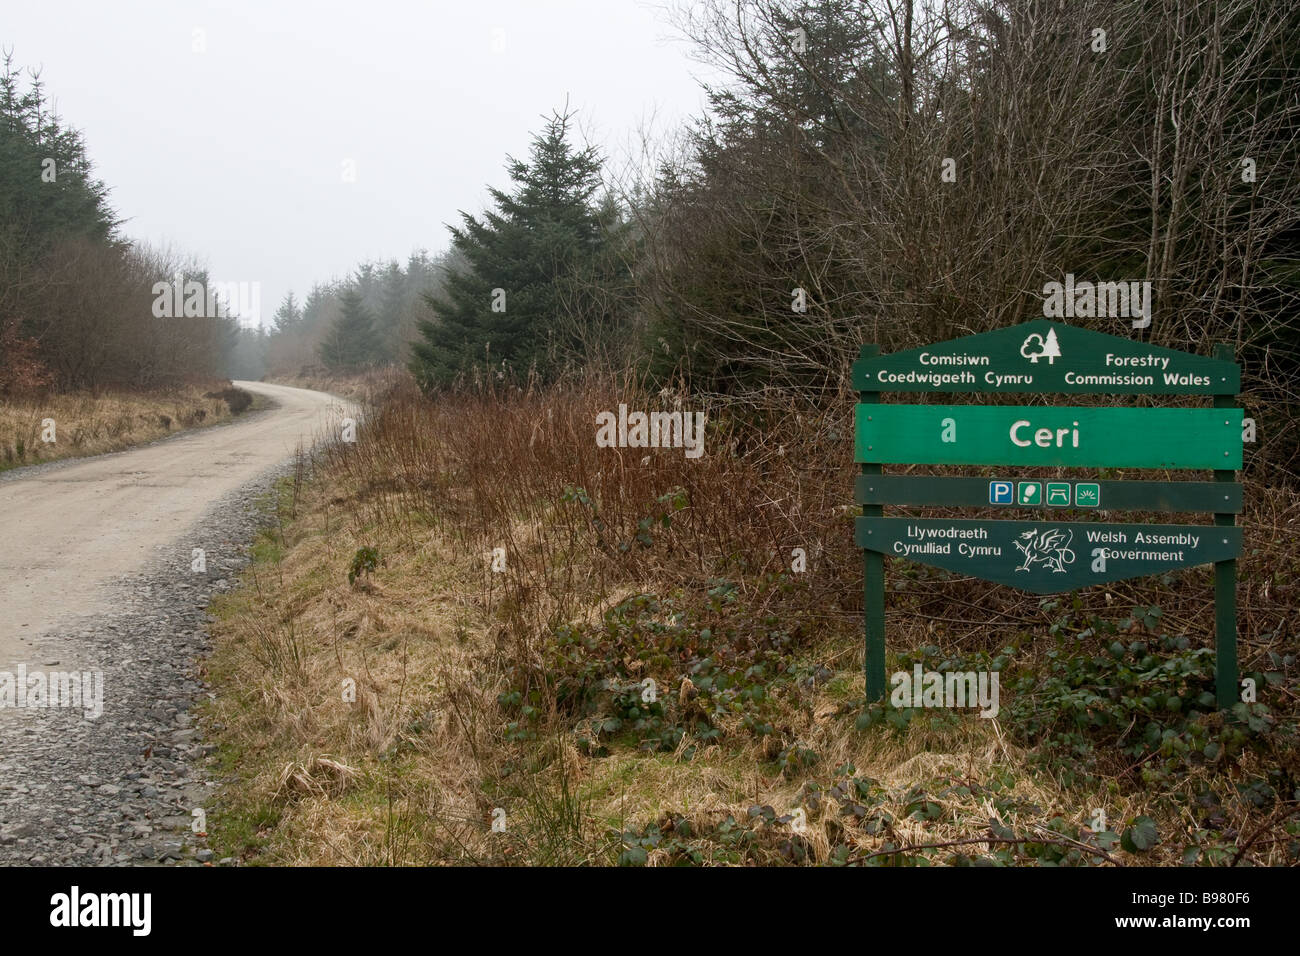 The Kerry Ridgeway through the Kerry (Ceri) Forest, near Newtown, Powys, Wales Stock Photo